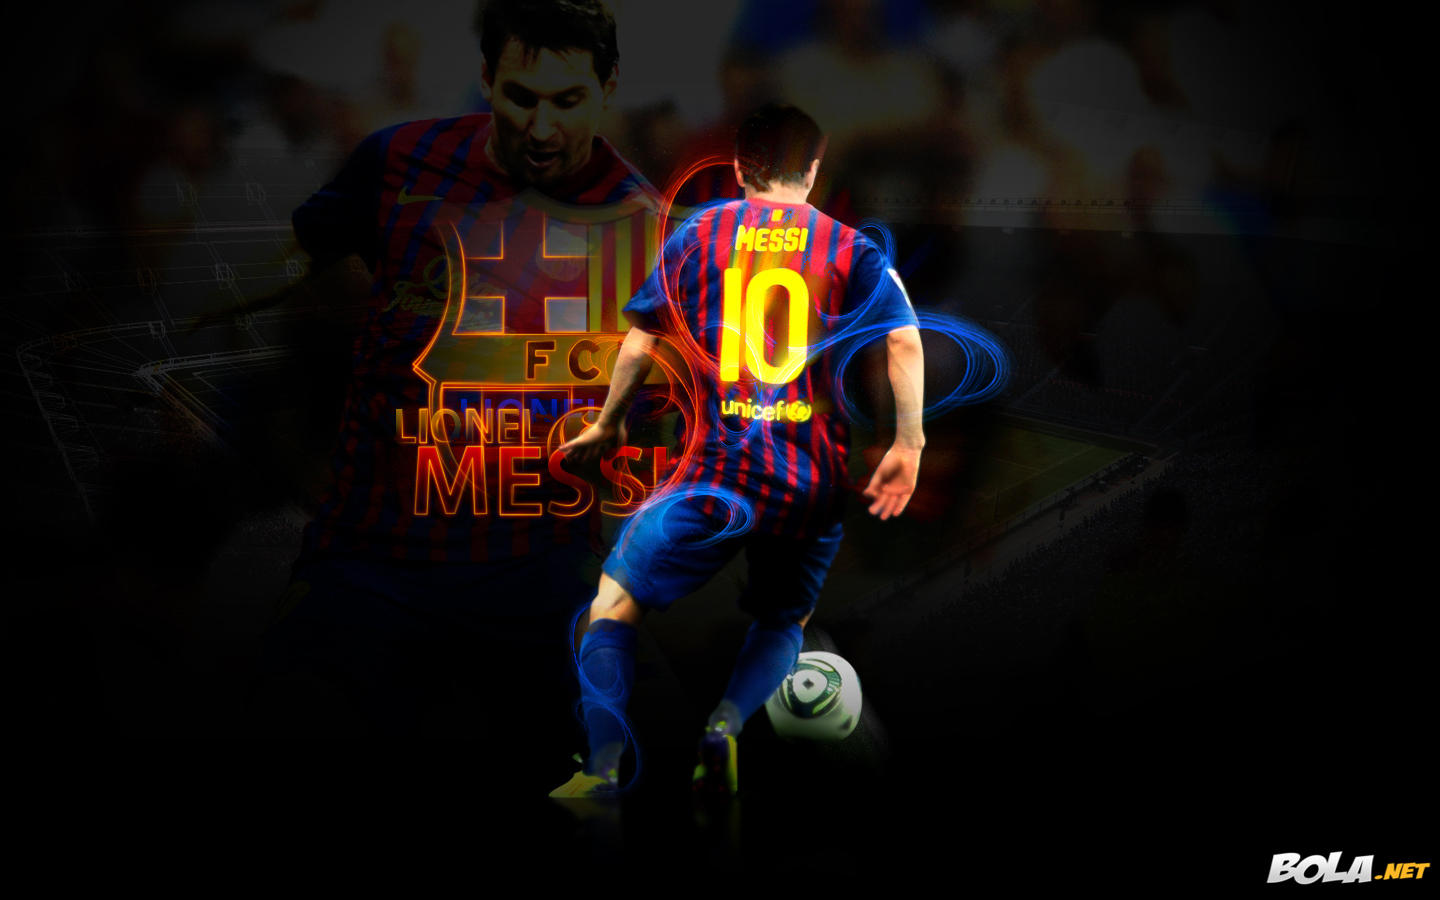 Deskripsi : Wallpaper Lionel Messi, size: 1440x900